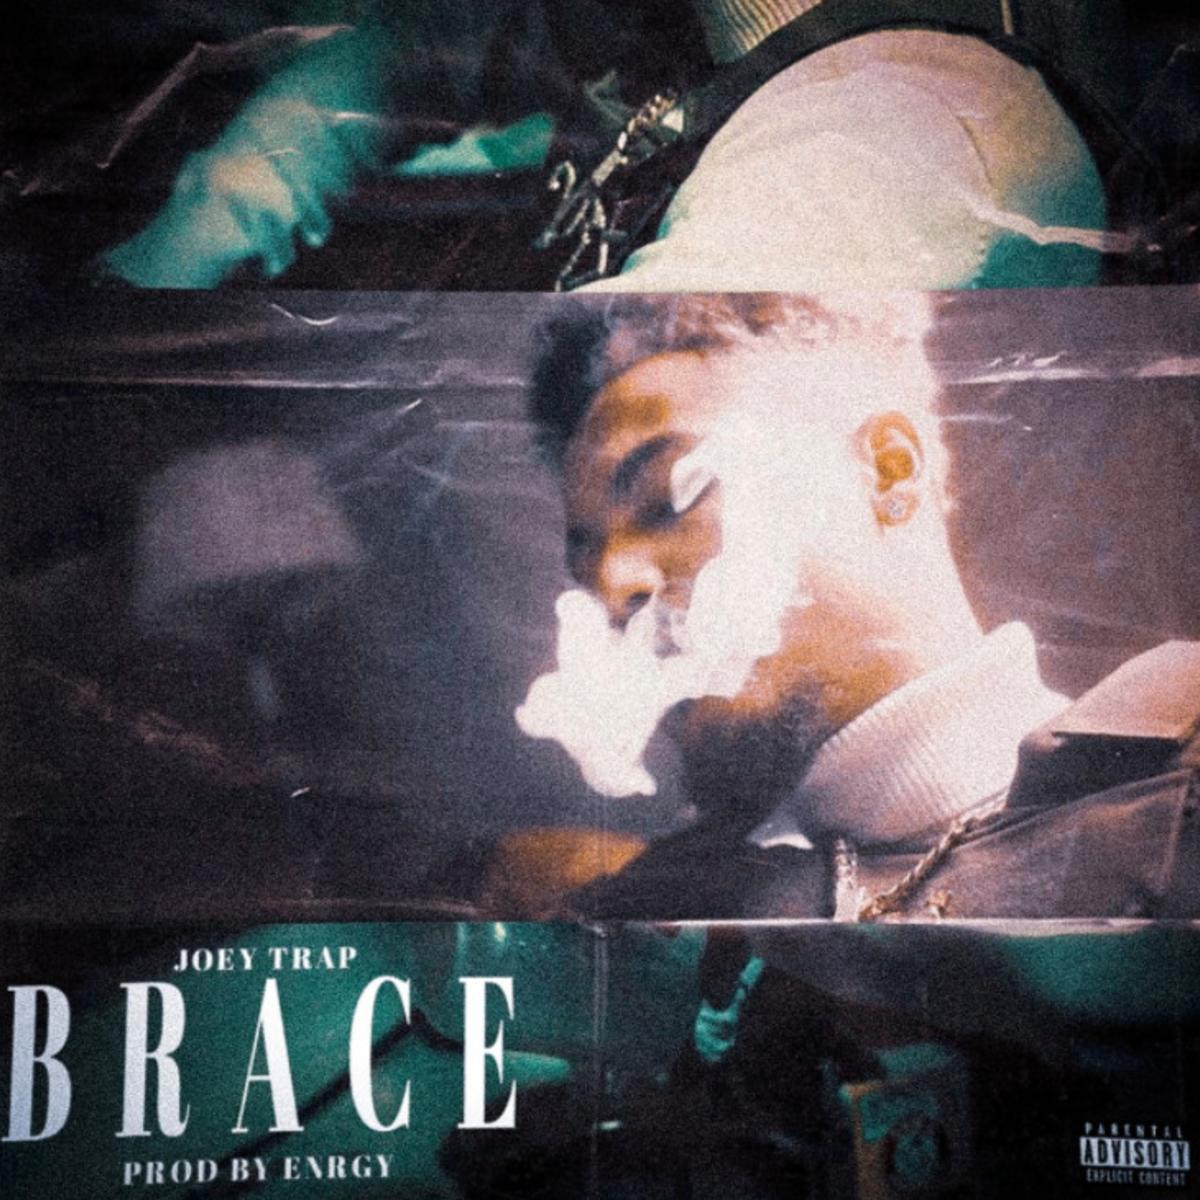 MP3: Joey Trap - Brace